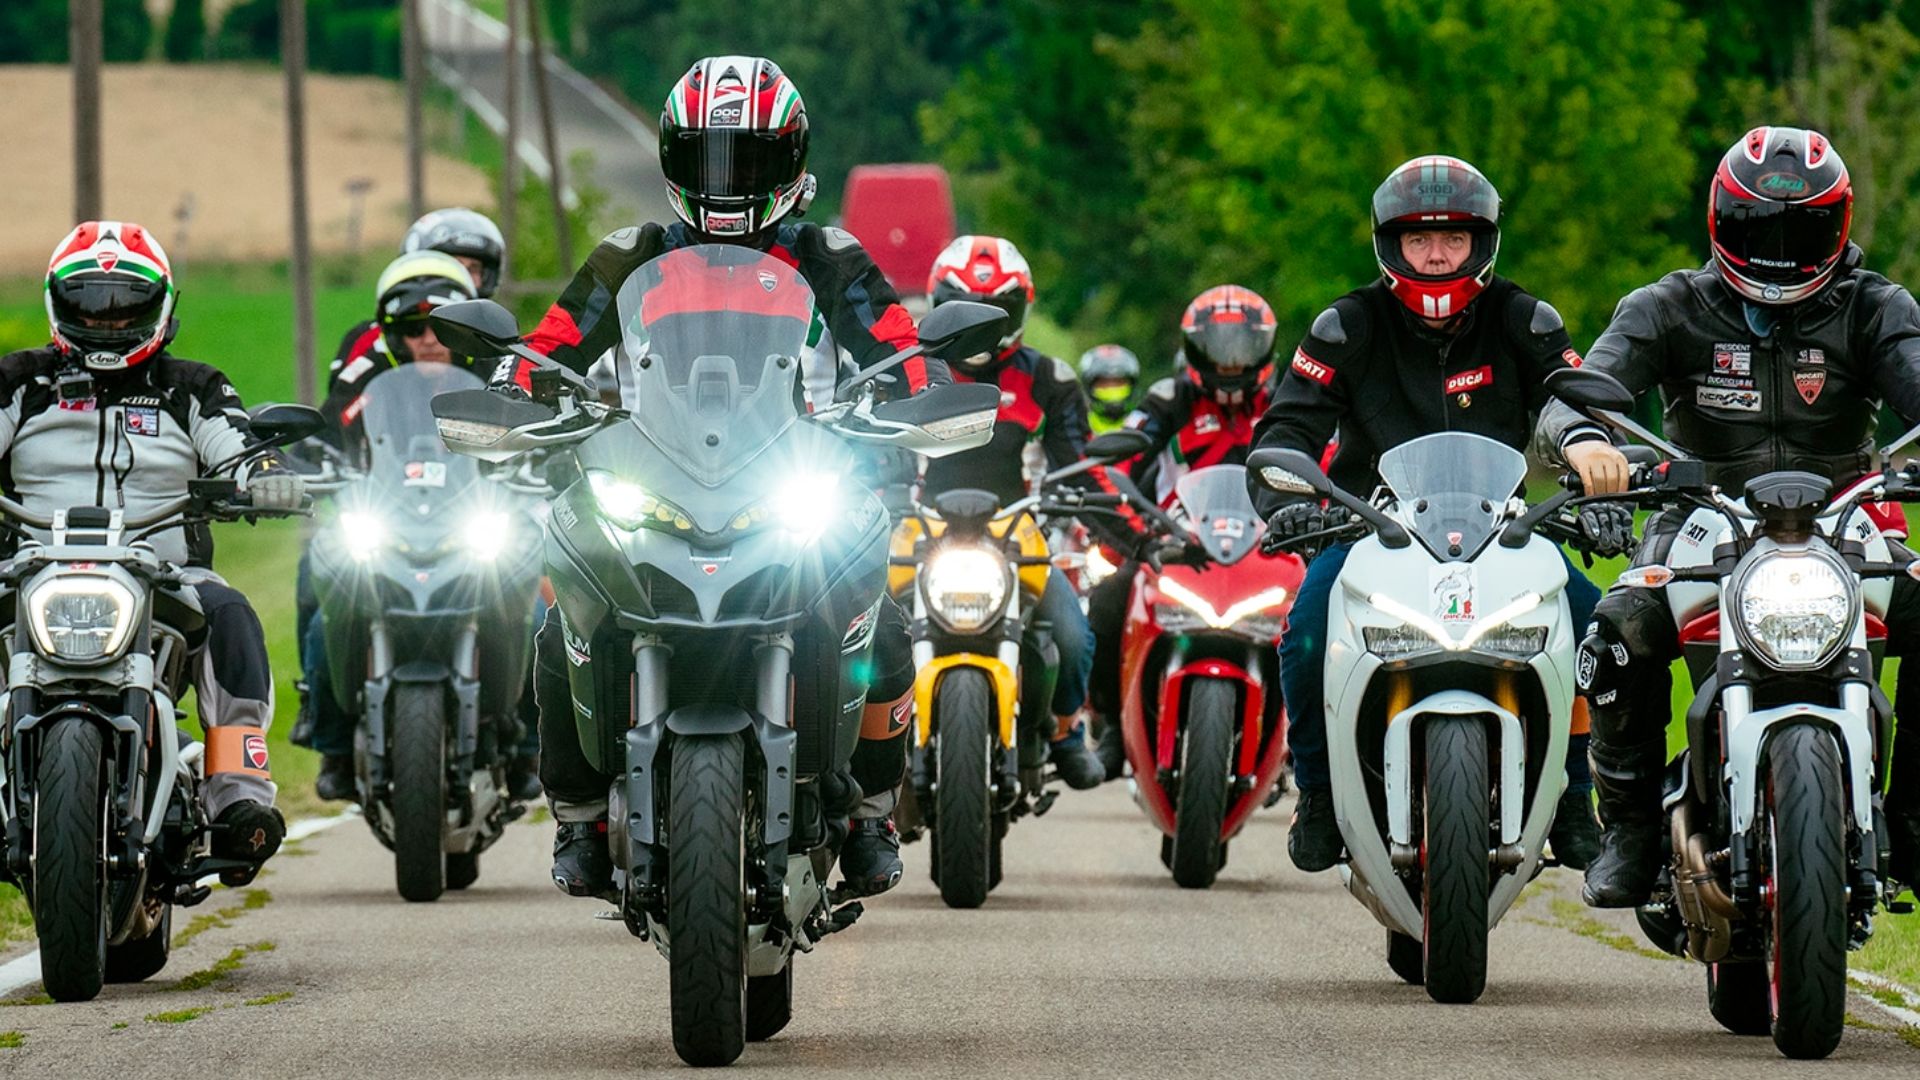 #WeRideAsOne: Ducatisti around the world meet to celebrate Ducati together